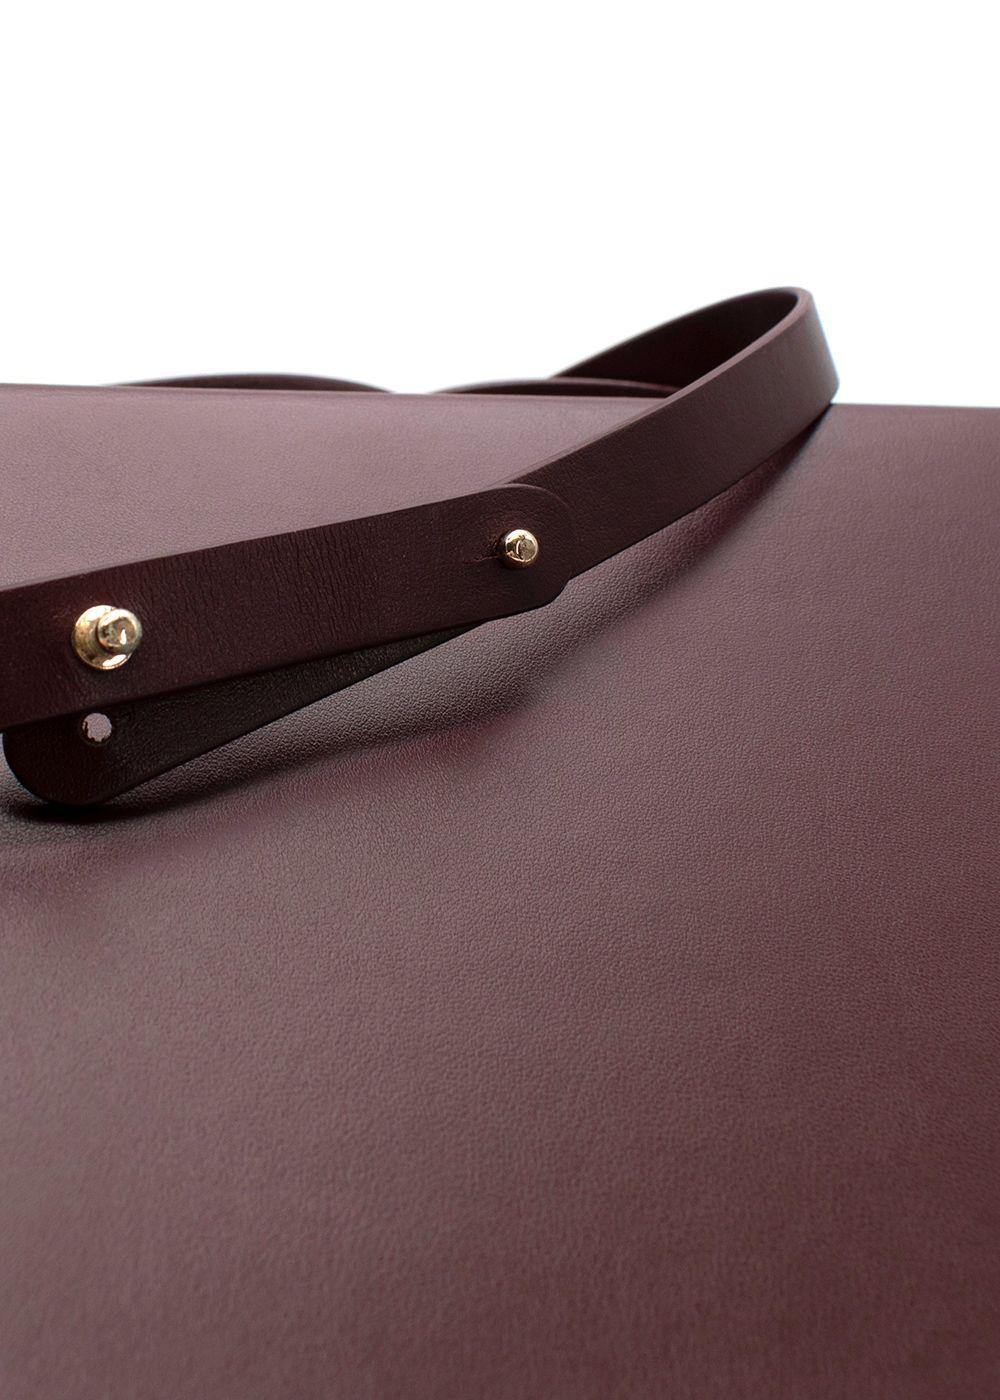 Women's Roksanda Ilincic Burgundy Leather Flat Box Bag For Sale